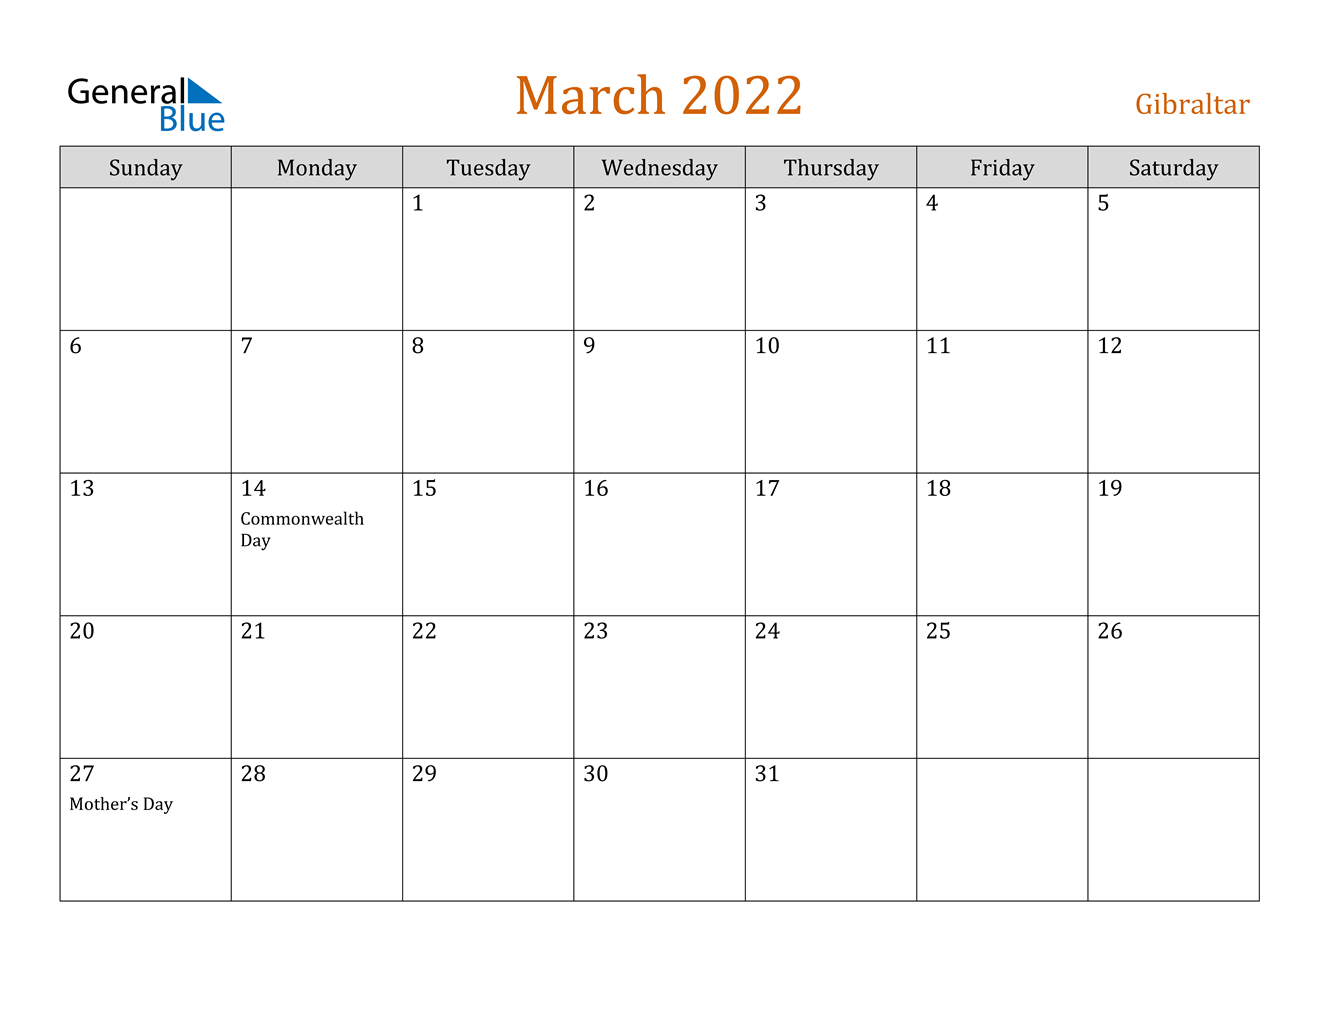 Gibraltar March 2022 Calendar With Holidays